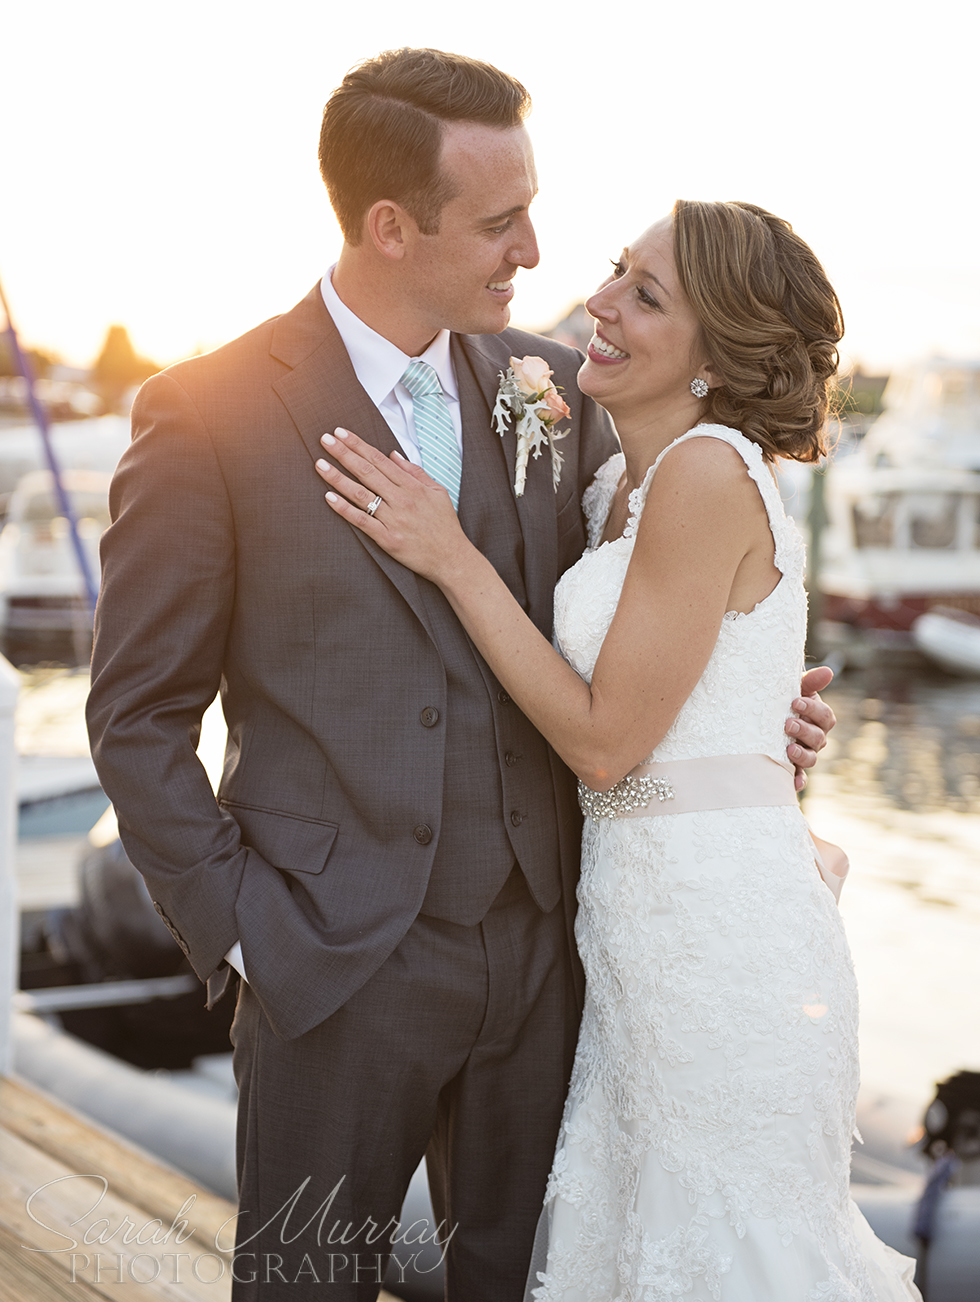 The Regatta Place Wedding in Newport, Rhode Island - Sarah Murray Photography